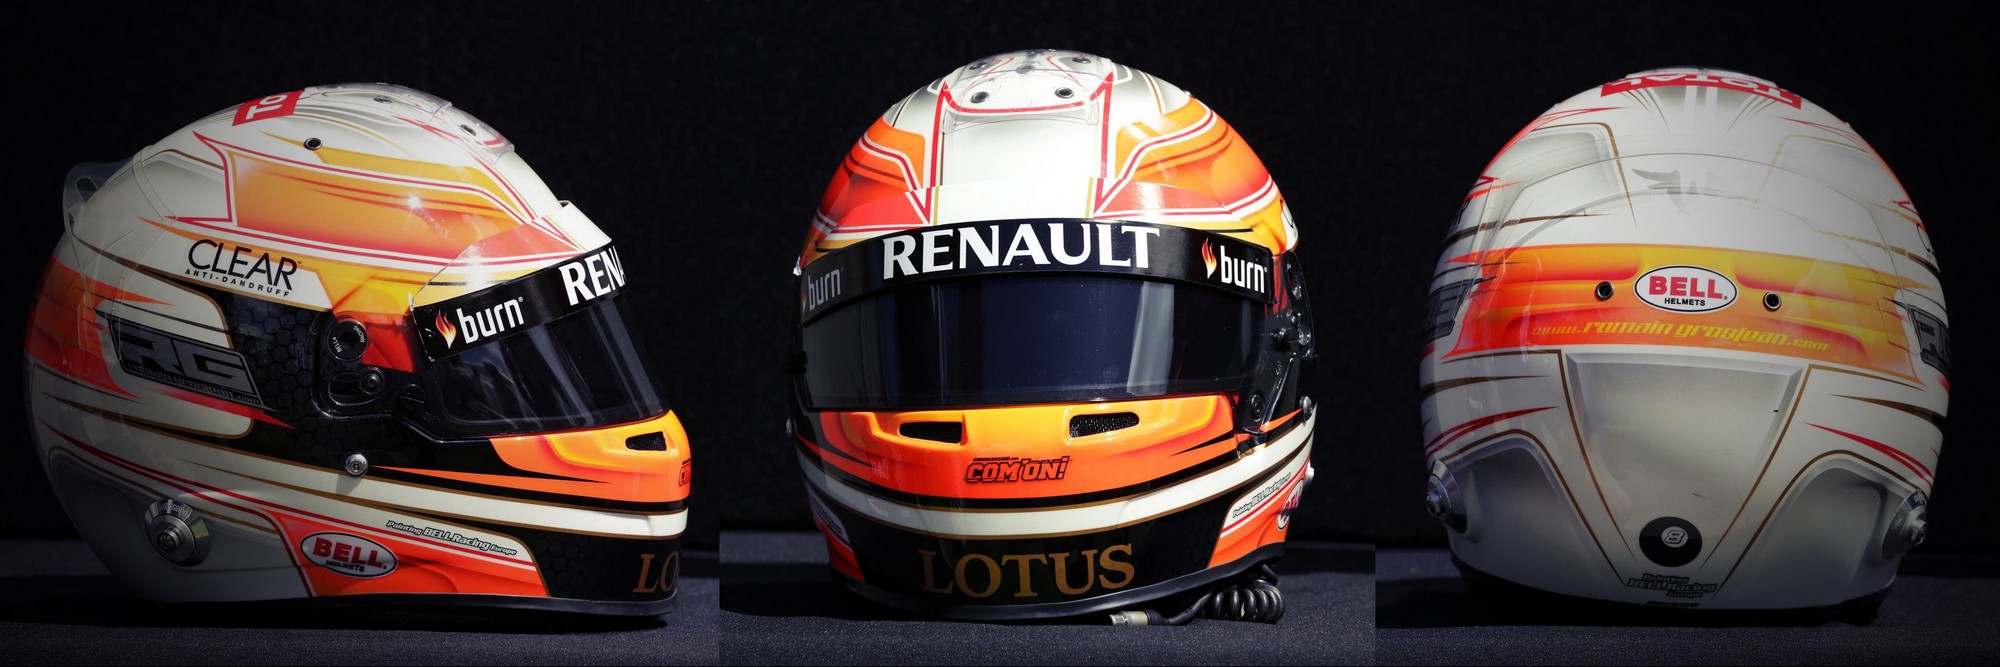 Шлем Романа Грожана на сезон 2011 года | 2011 helmet of Romain Grosjean